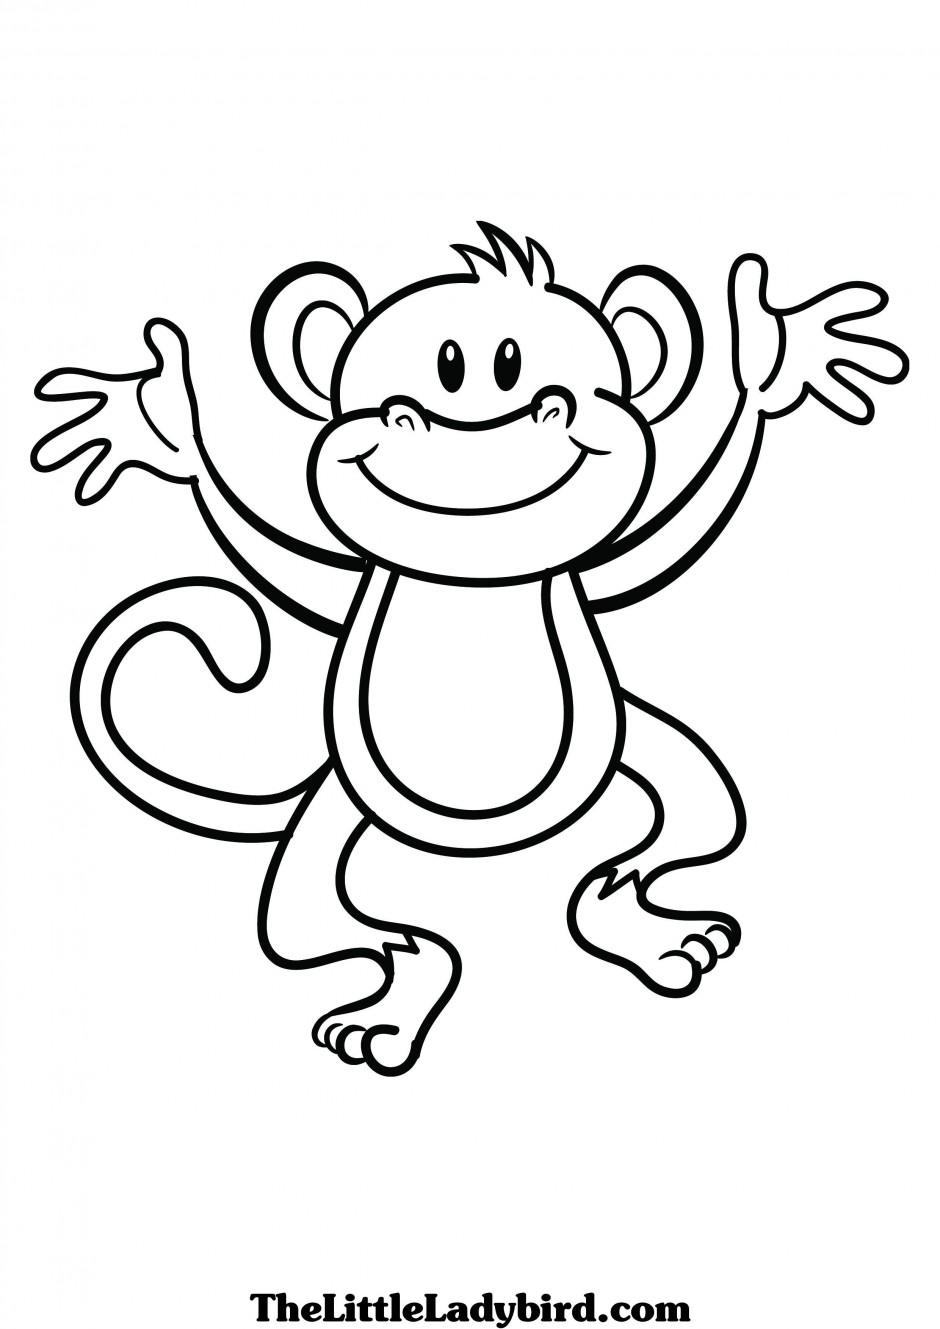 Cute monkey clip art black and white free